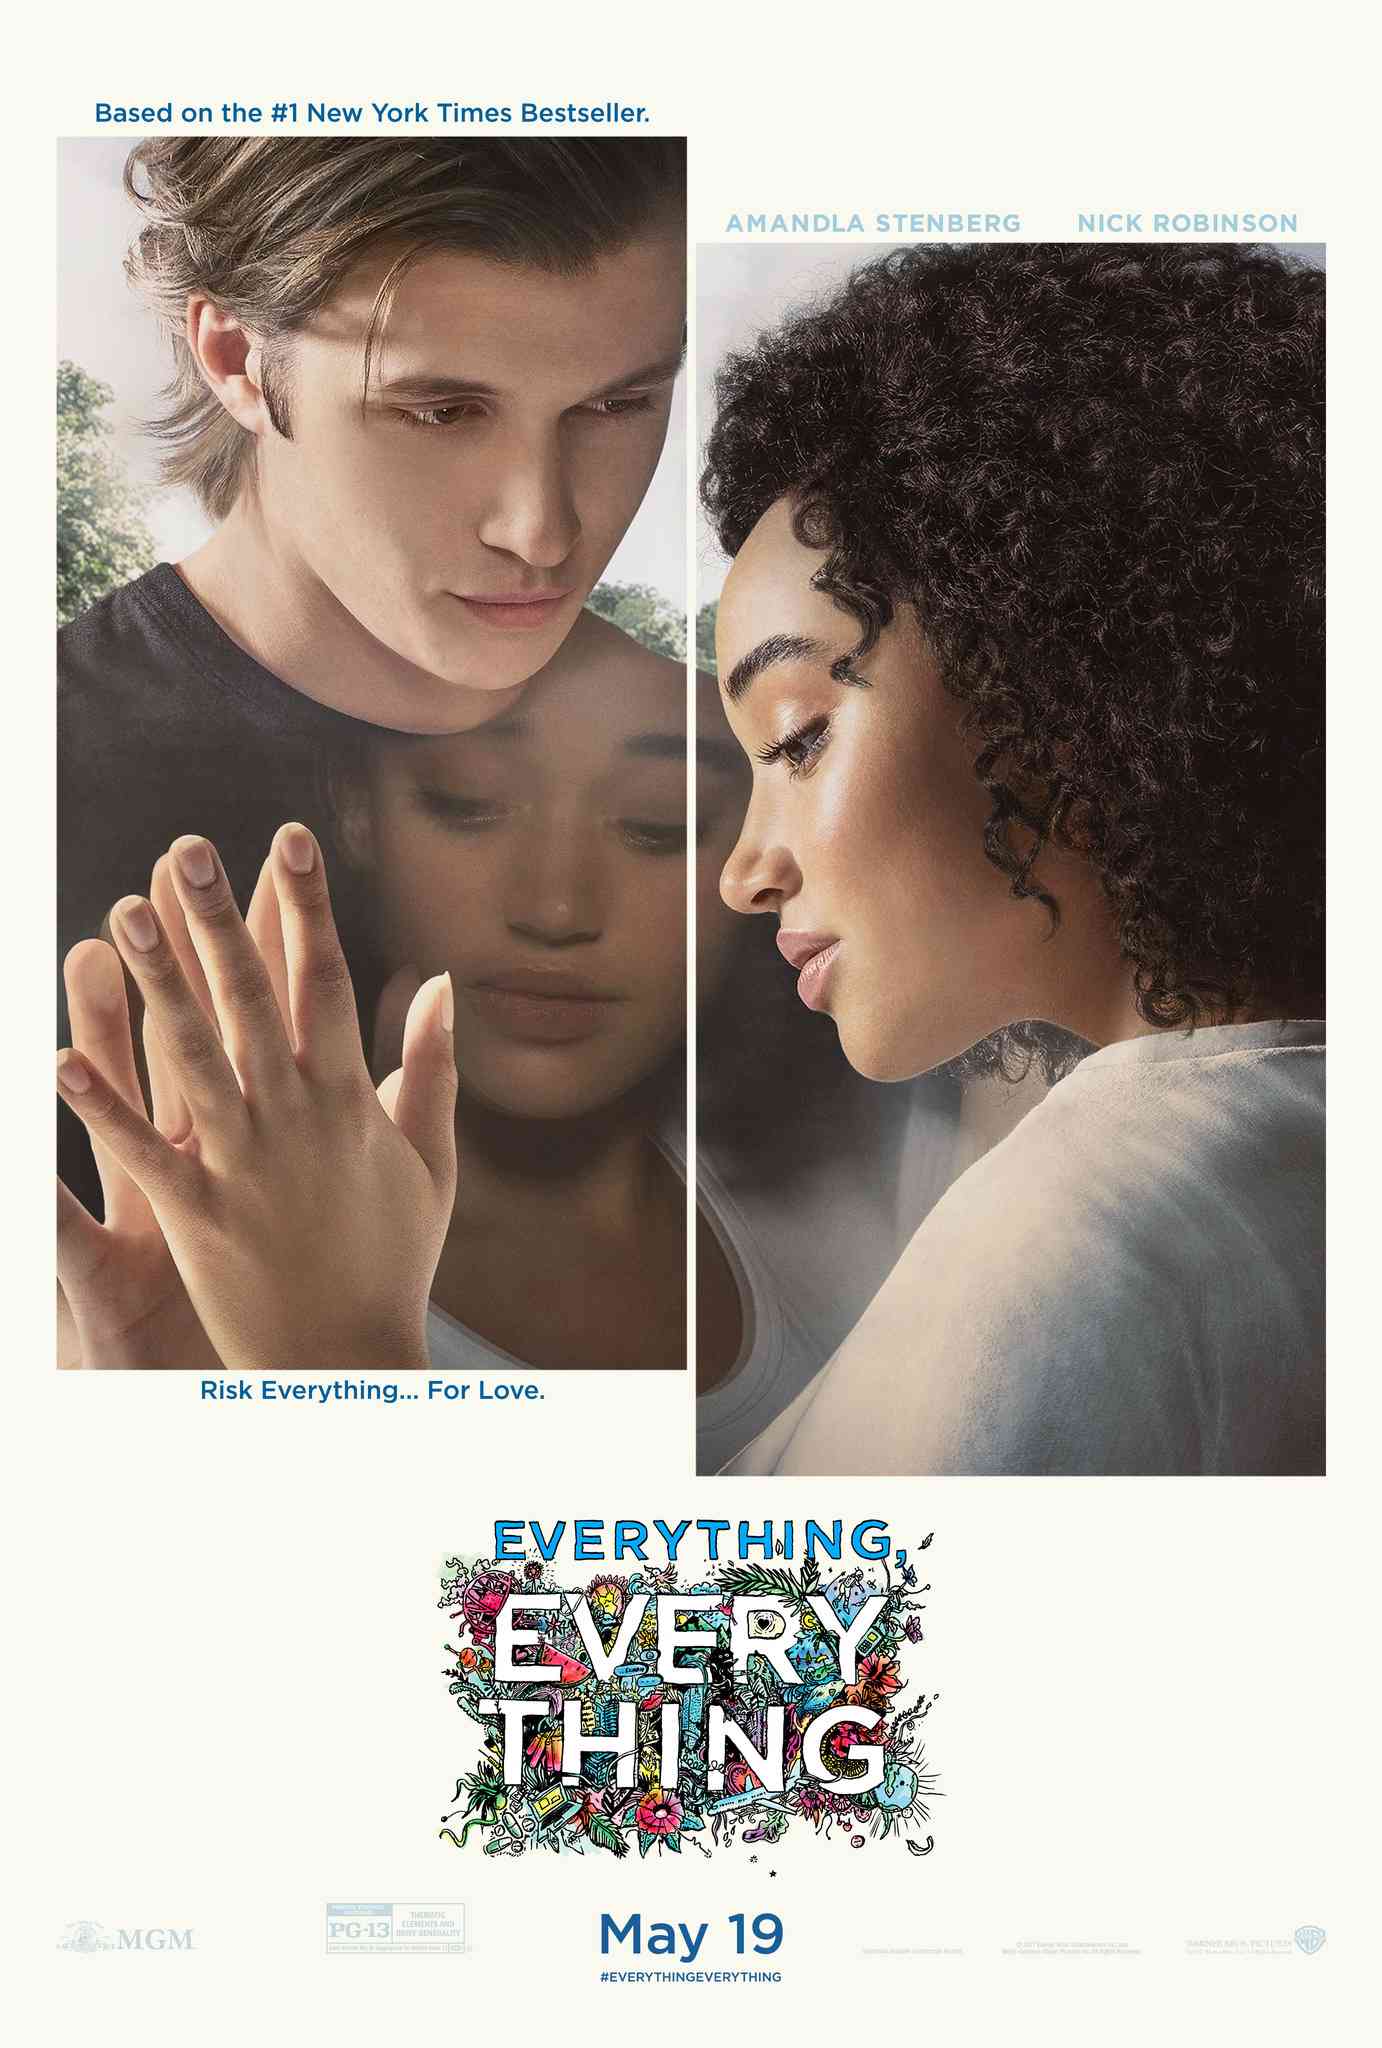 FULL MOVIE: Everything, Everything (2017) [Romance]